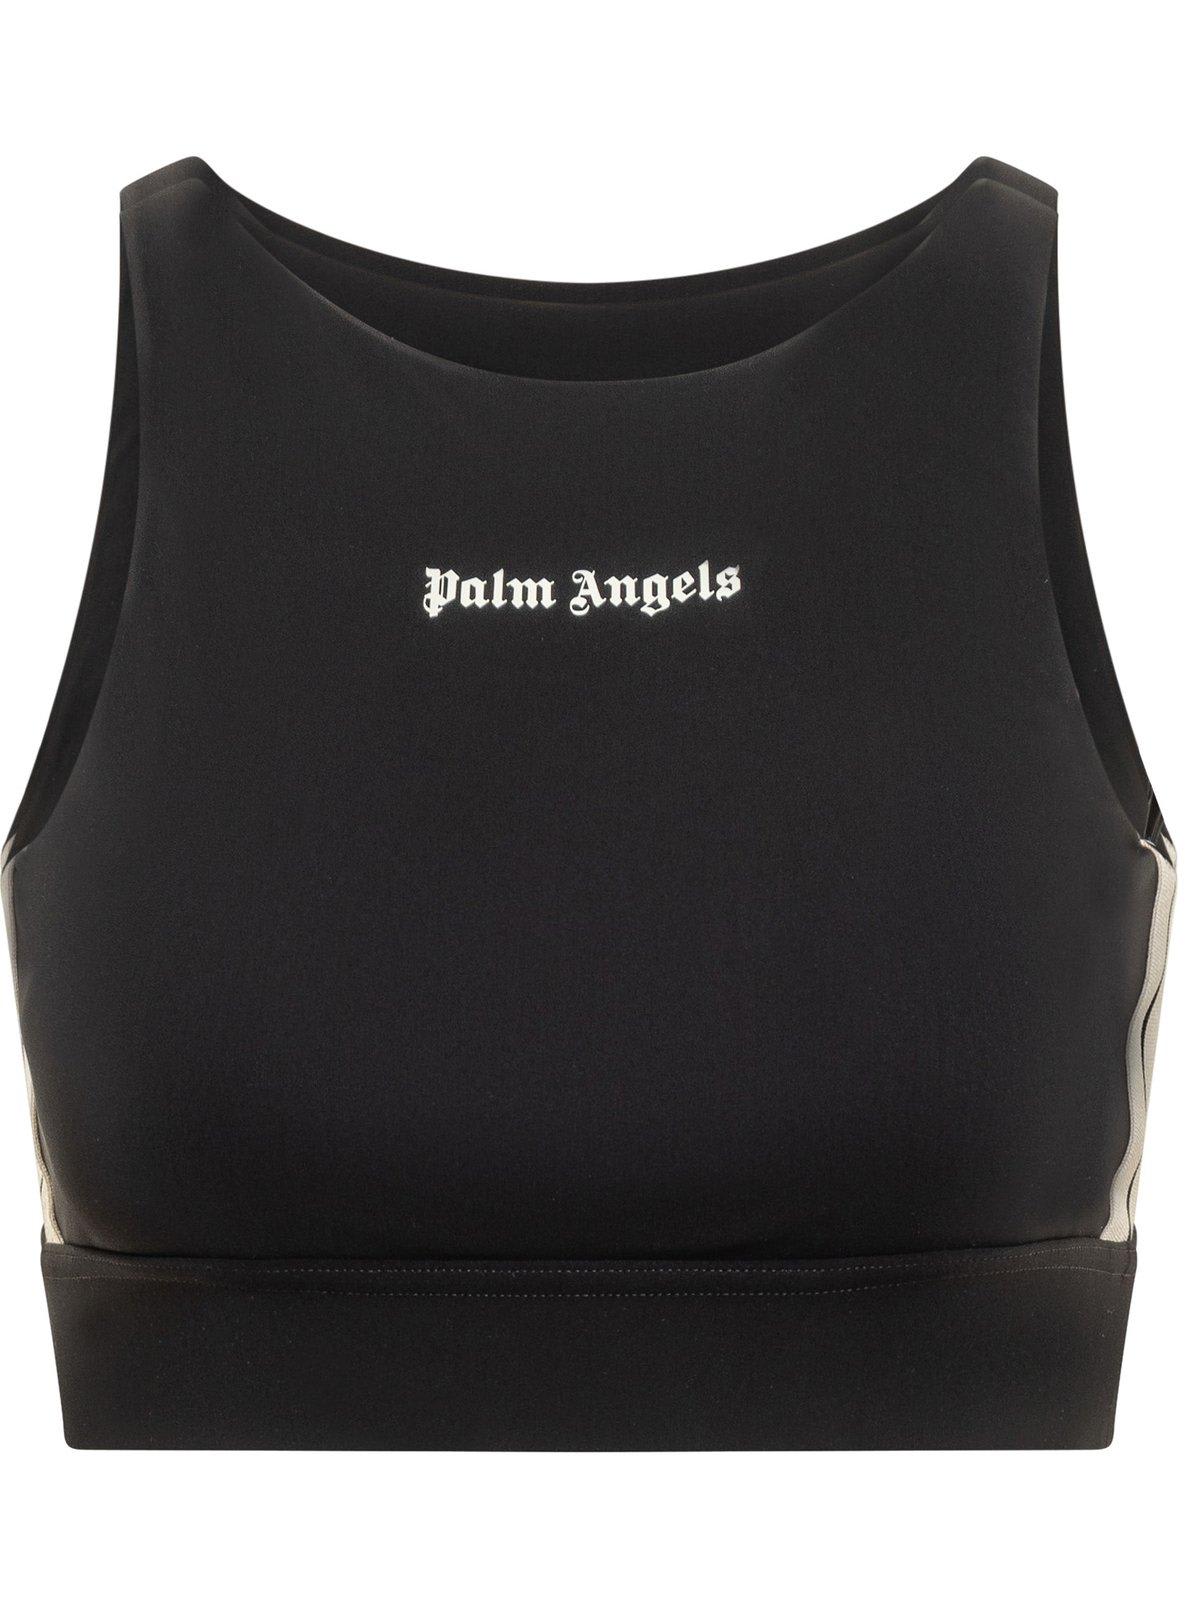 Shop Palm Angels Logo Printed Sports Top